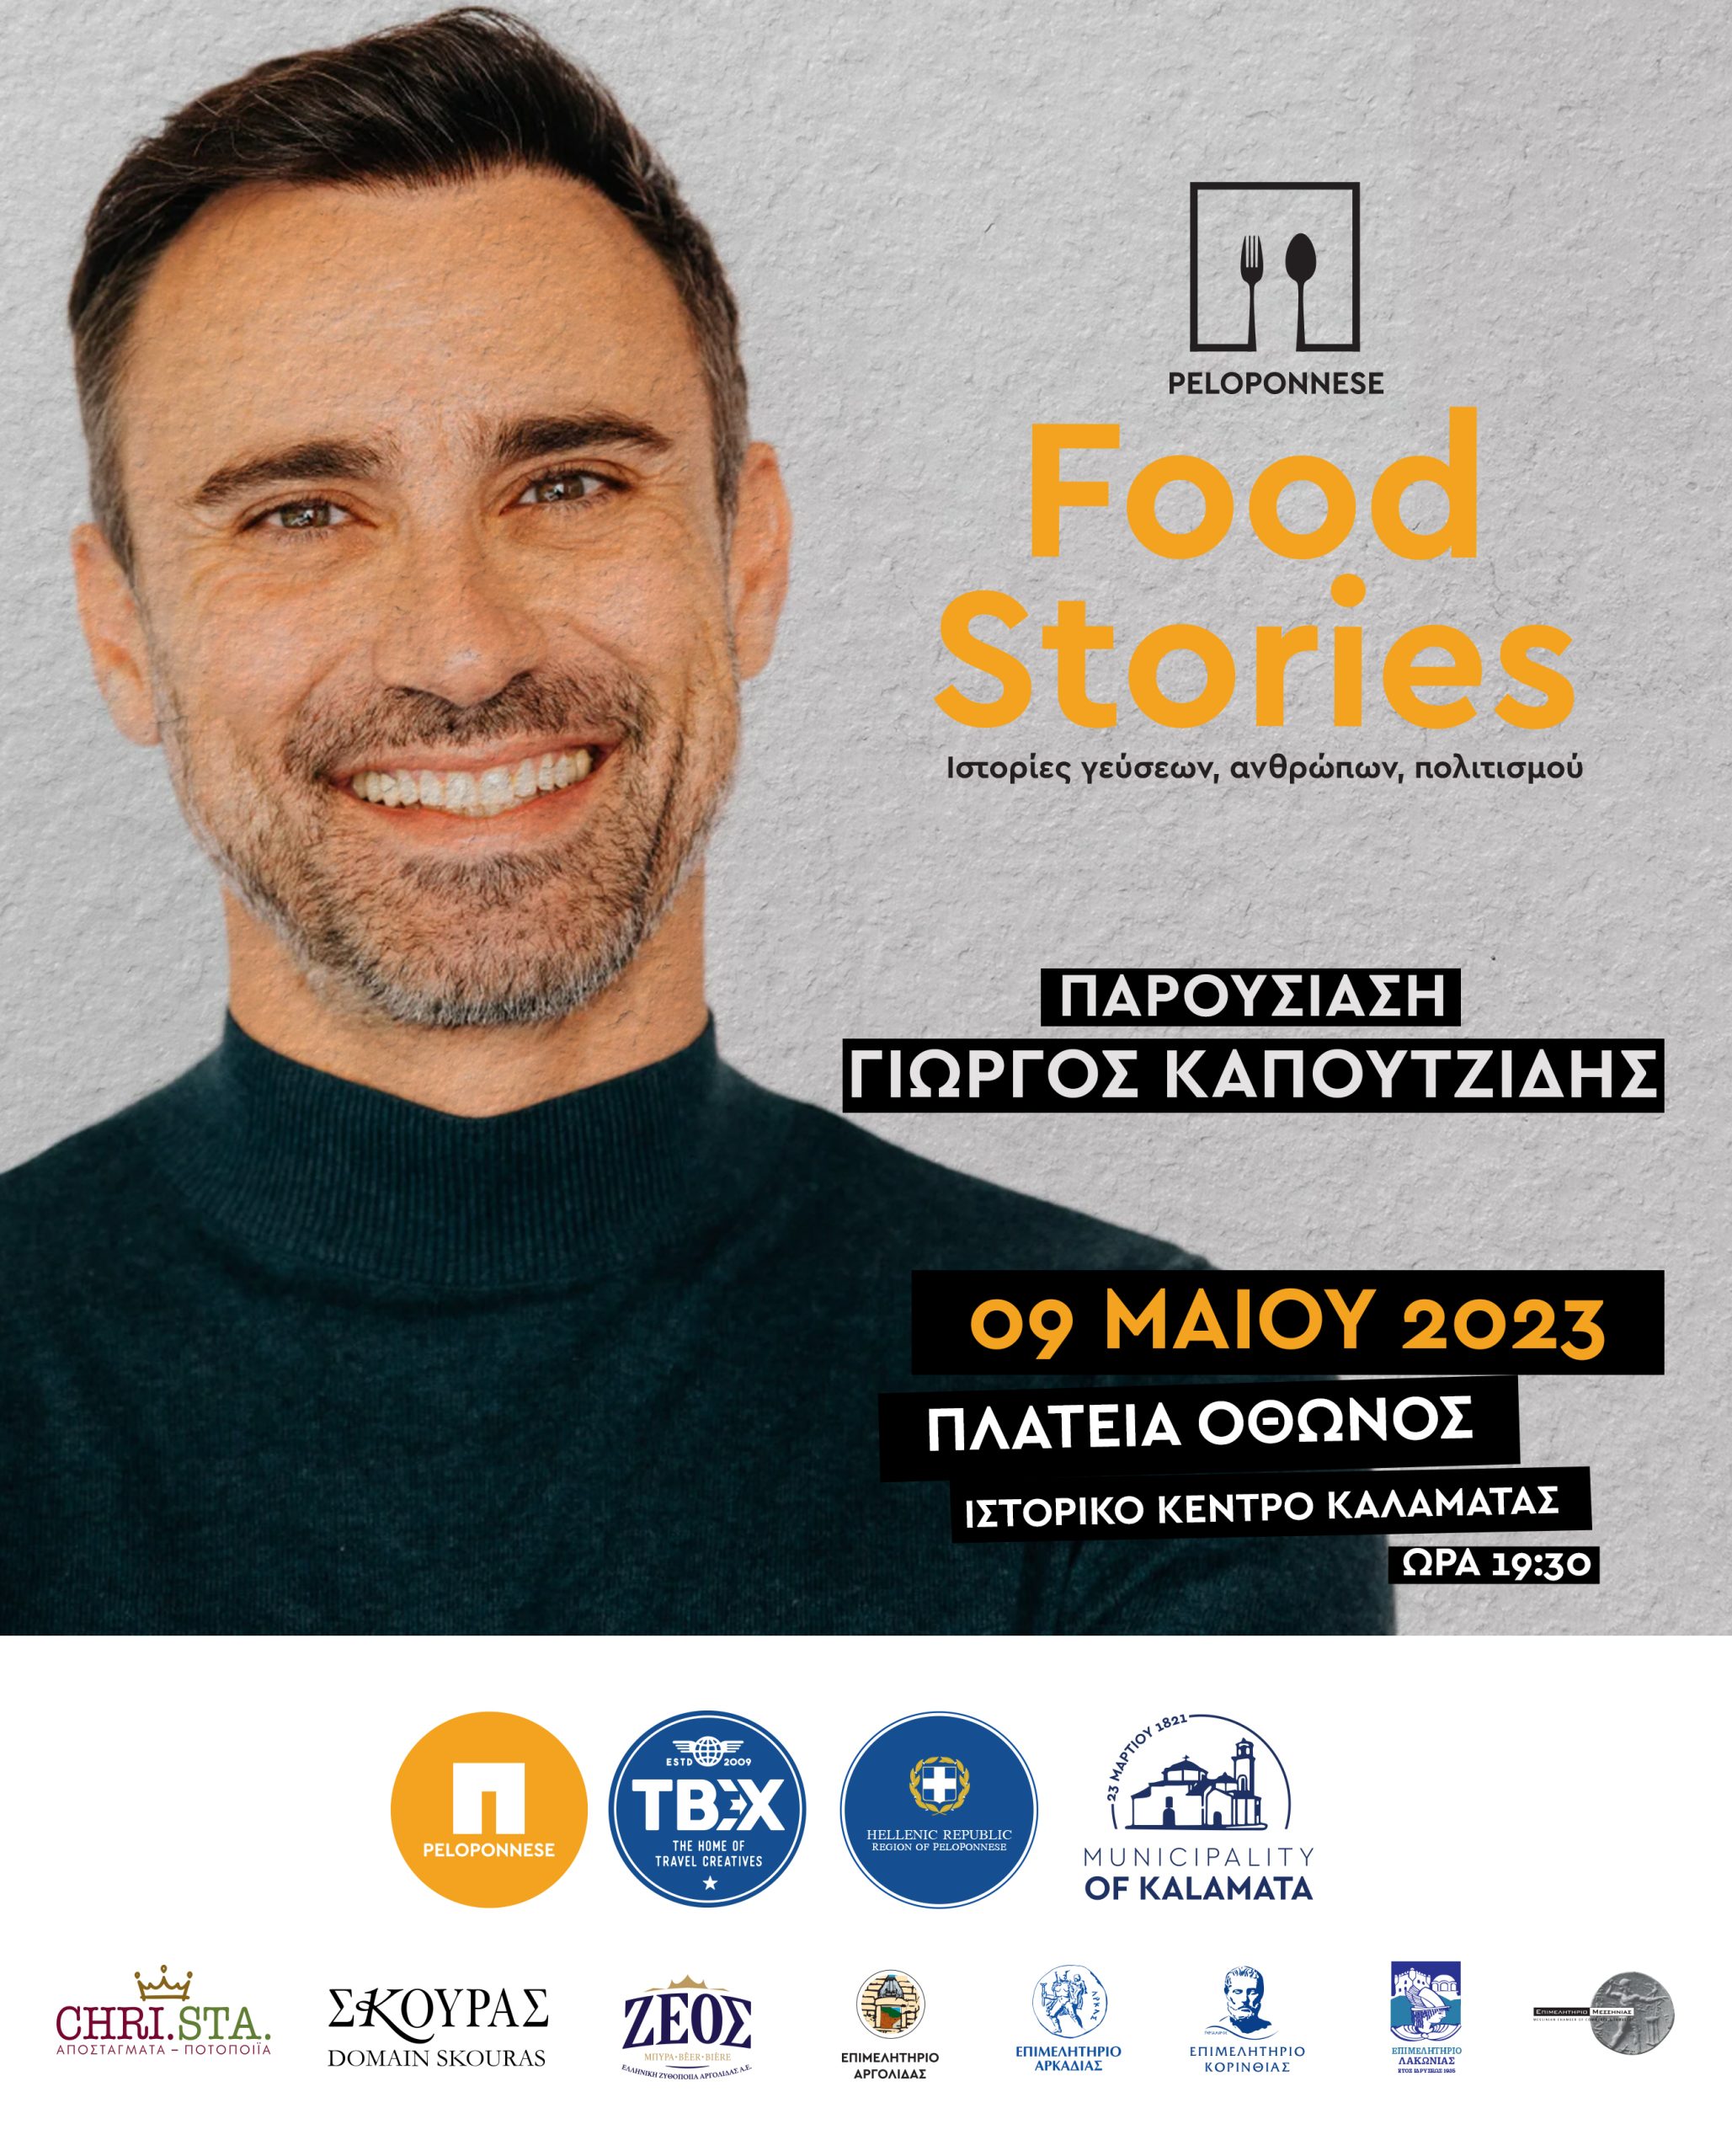 Peloponnese Food Stories αύριο Τρίτη στην Καλαμάτα, στο πλαίσιο του TBEX 2023 Peloponnese